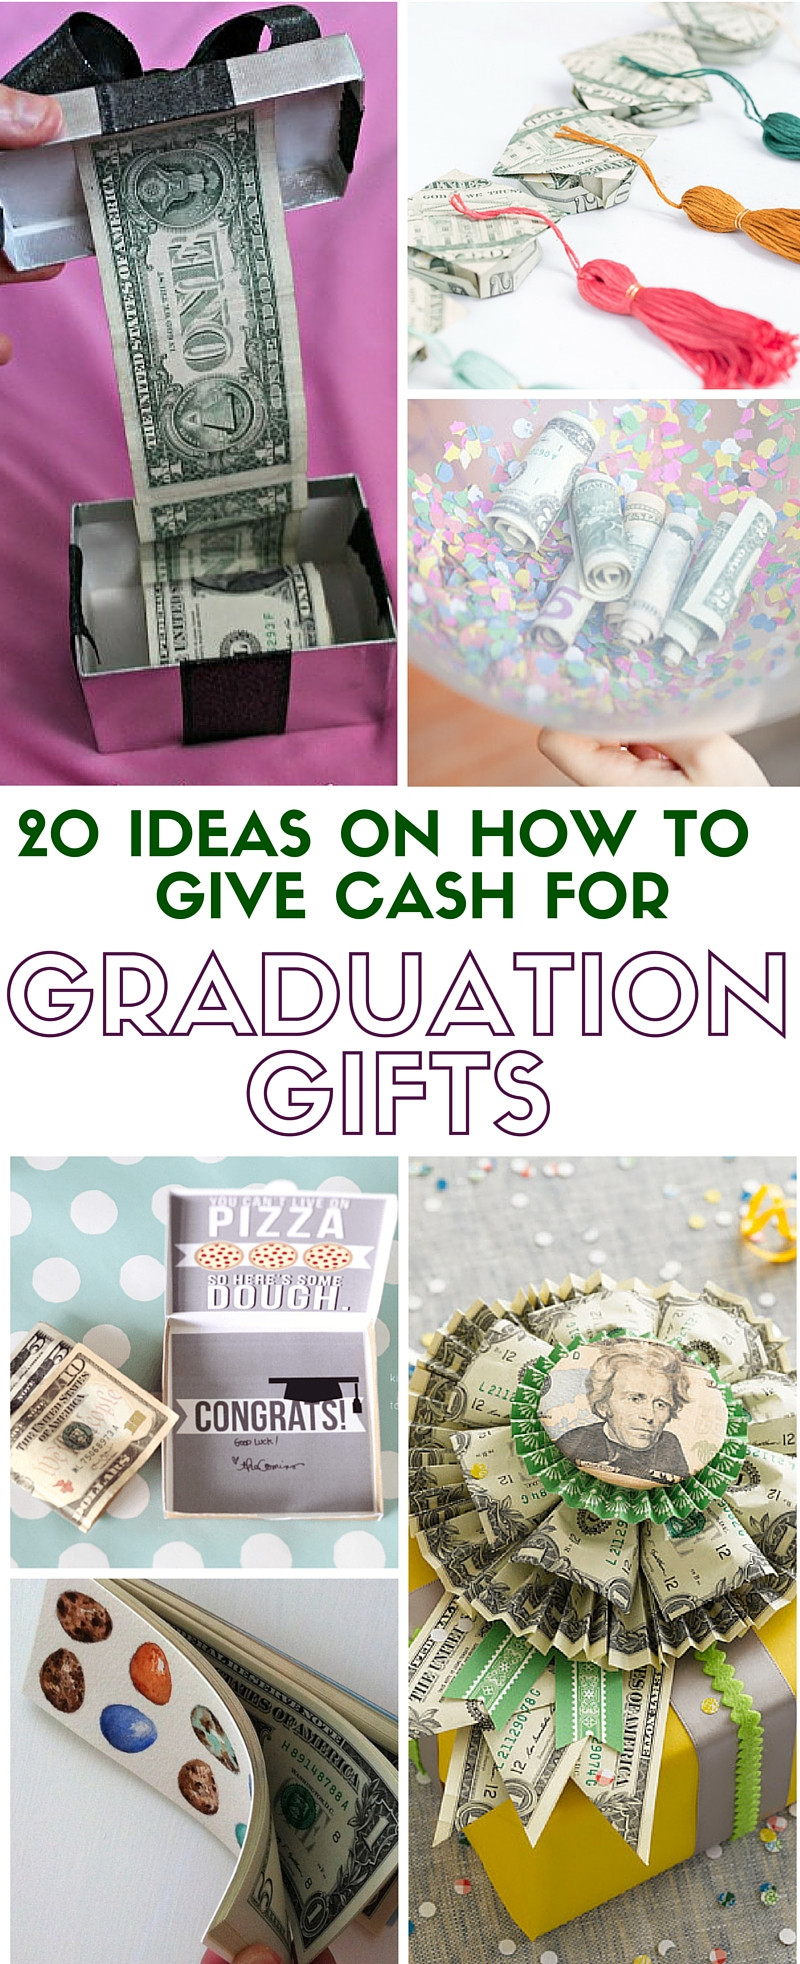 Fun Graduation Gift Ideas
 31 Back To School Teacher Gift Ideas The Crafty Blog Stalker